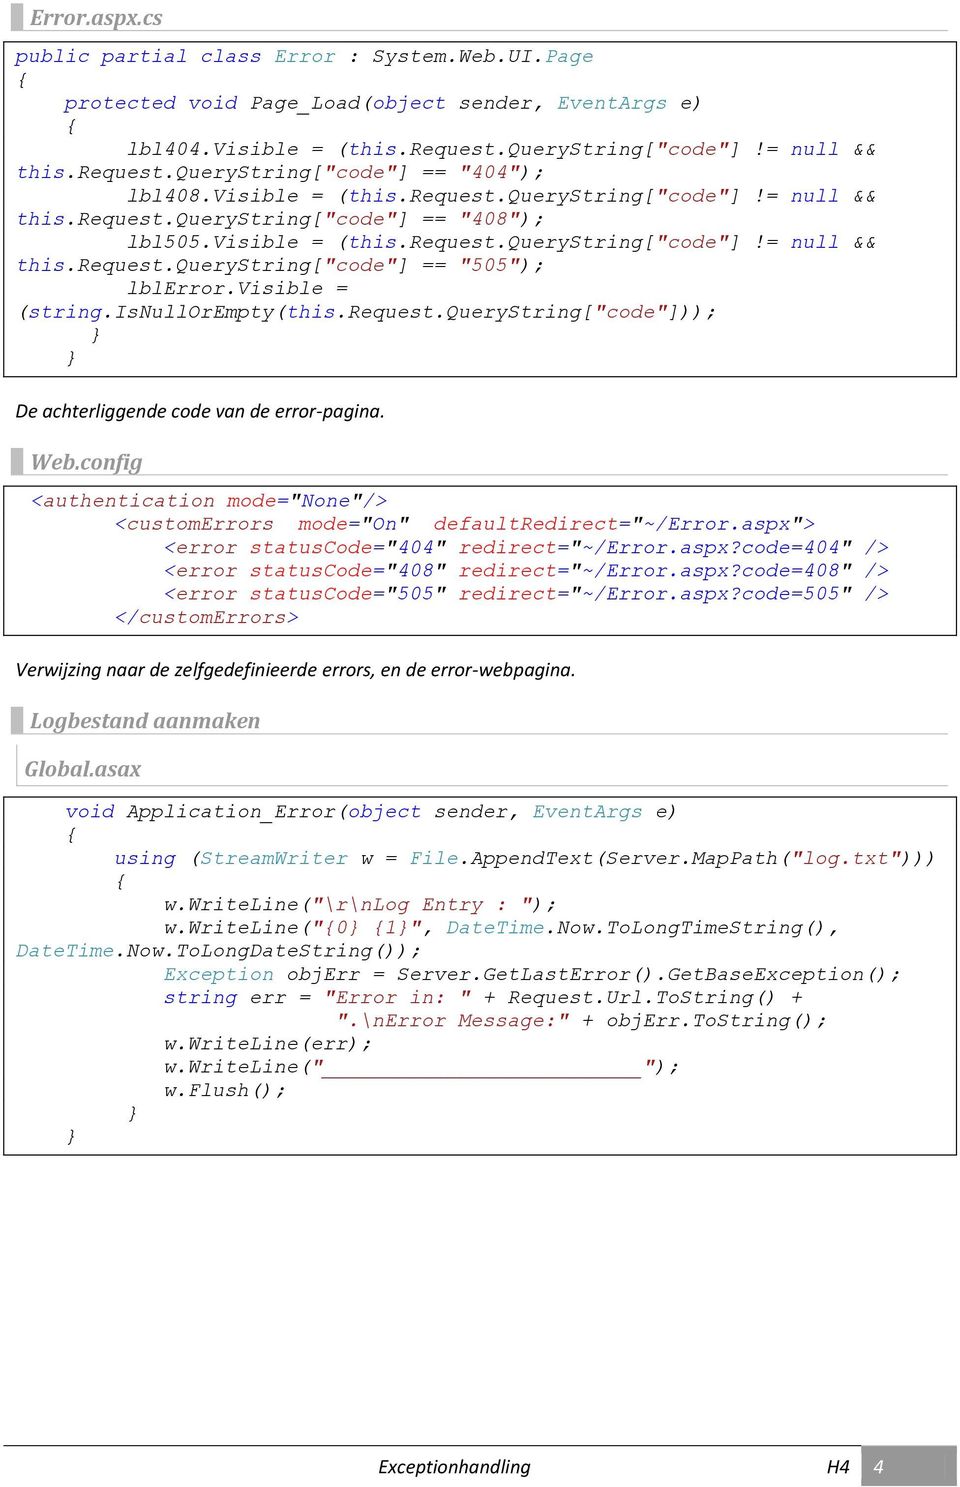 visible = (string.isnullorempty(this.request.querystring["code"])); De achterliggende code van de error-pagina. Web.